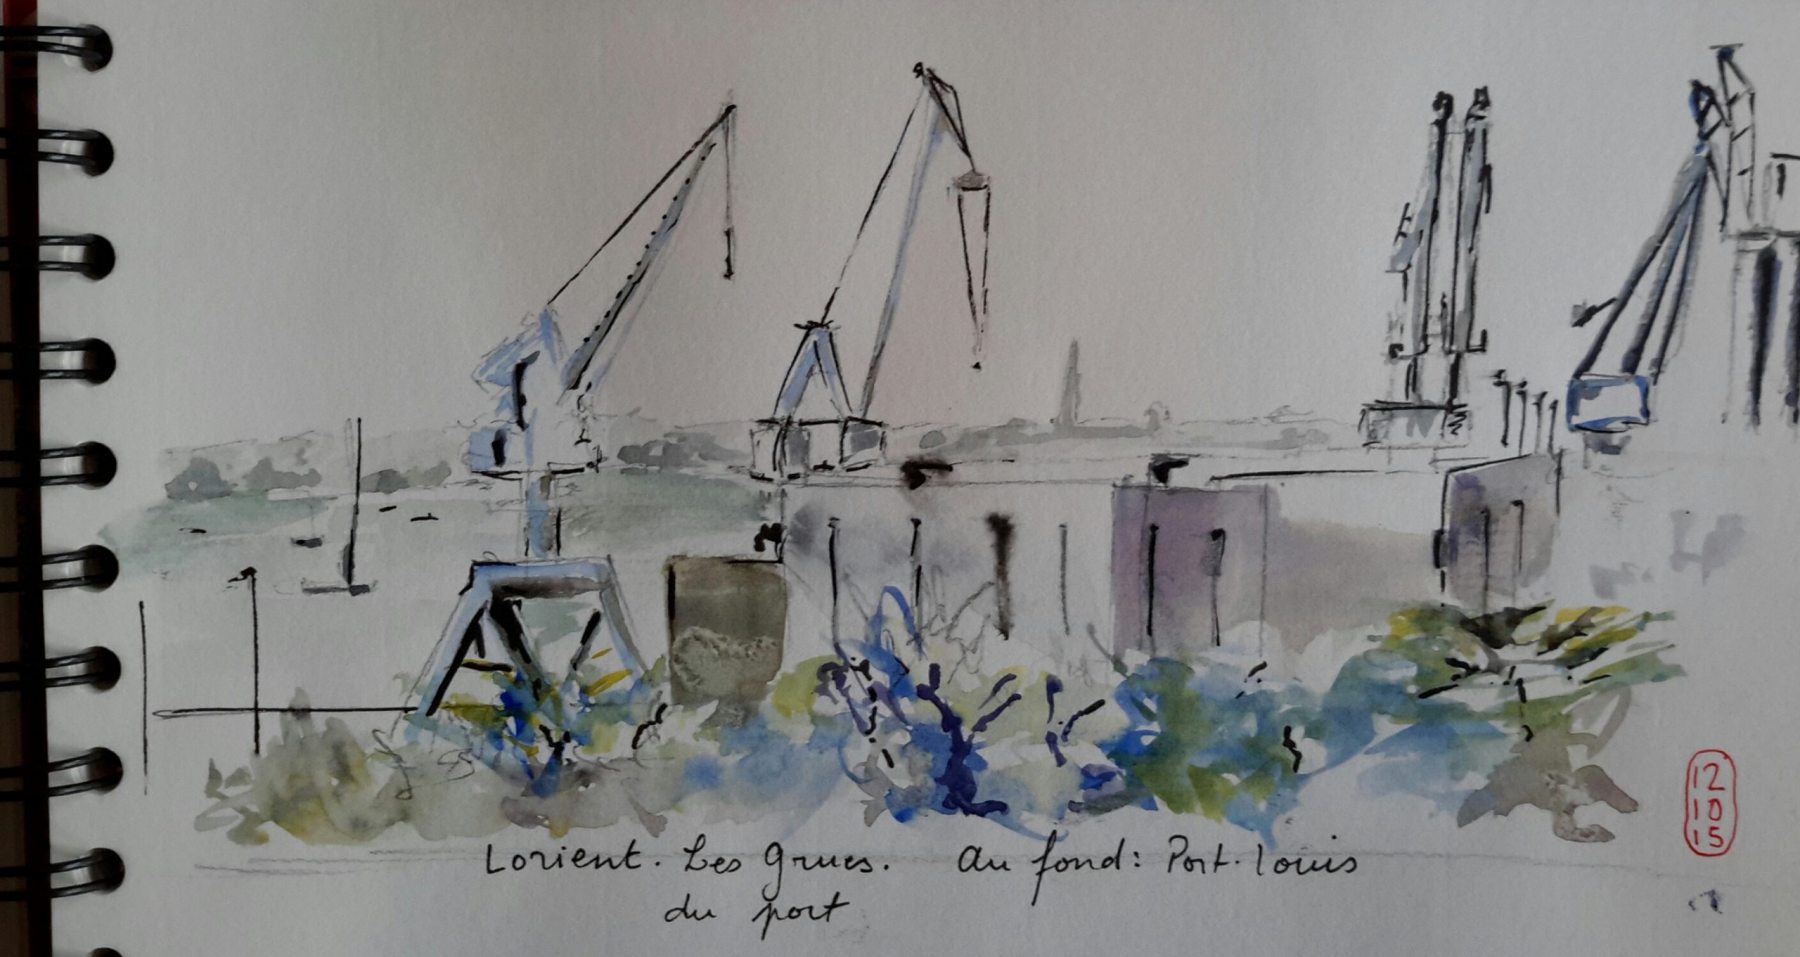 Les grues du port de Lorient